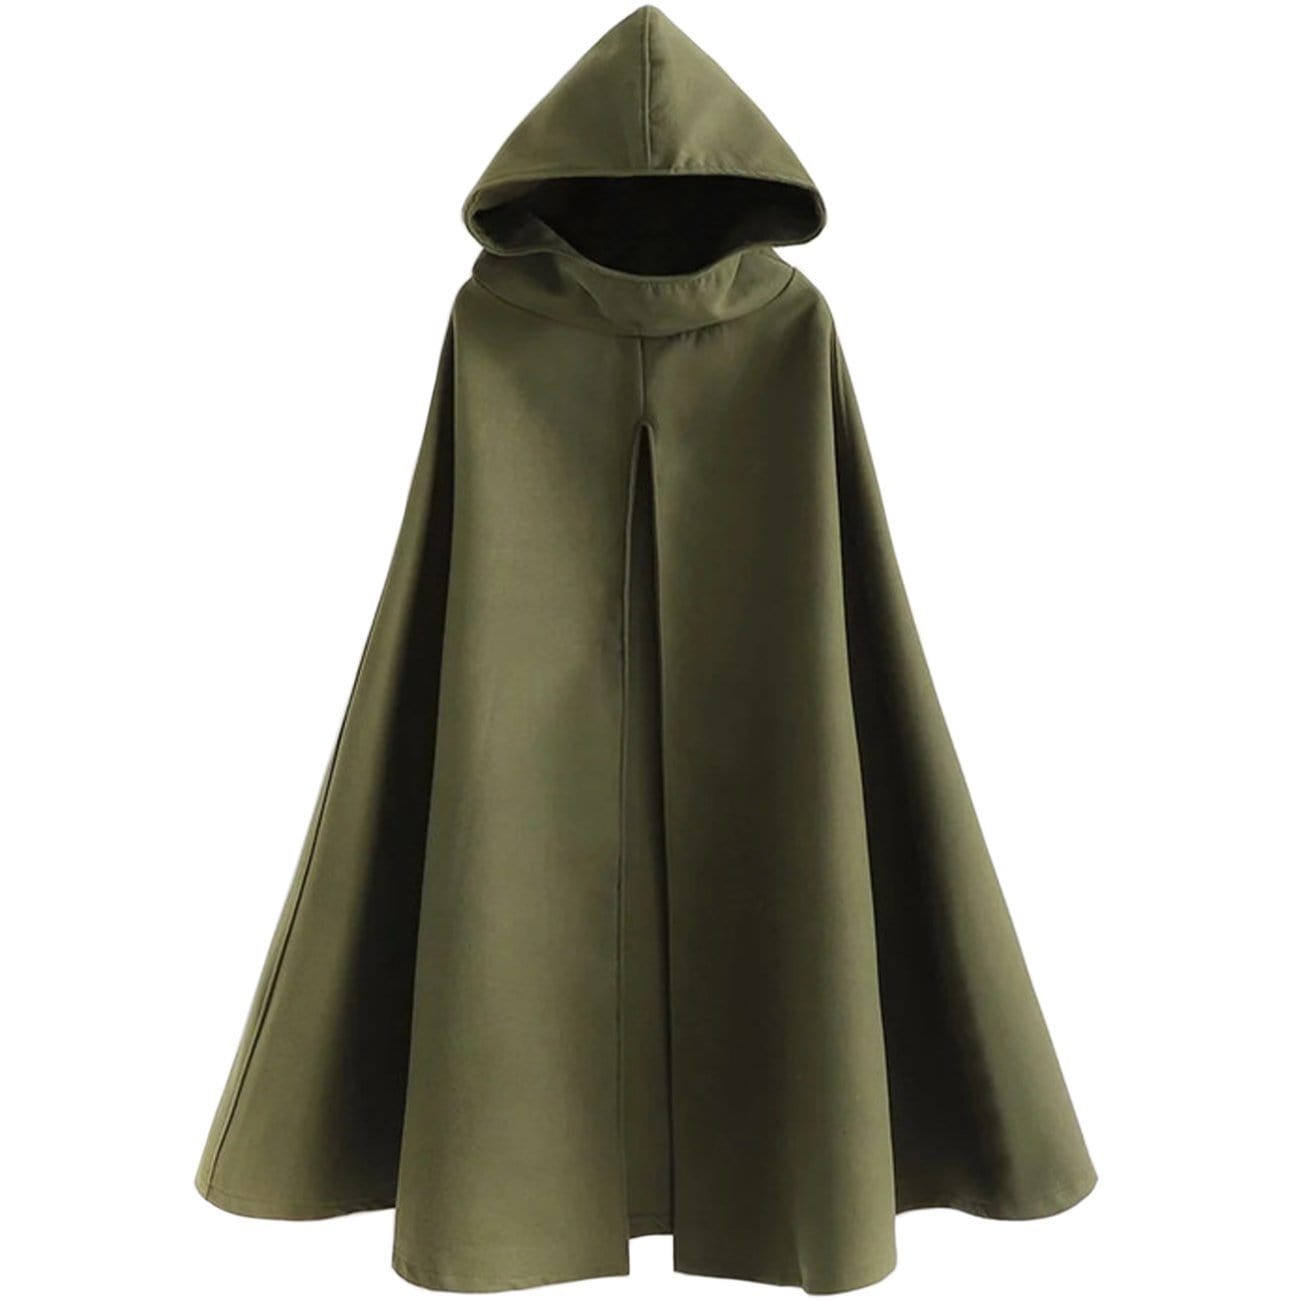 TO Dark Wizard Hooded Cloak Jacket